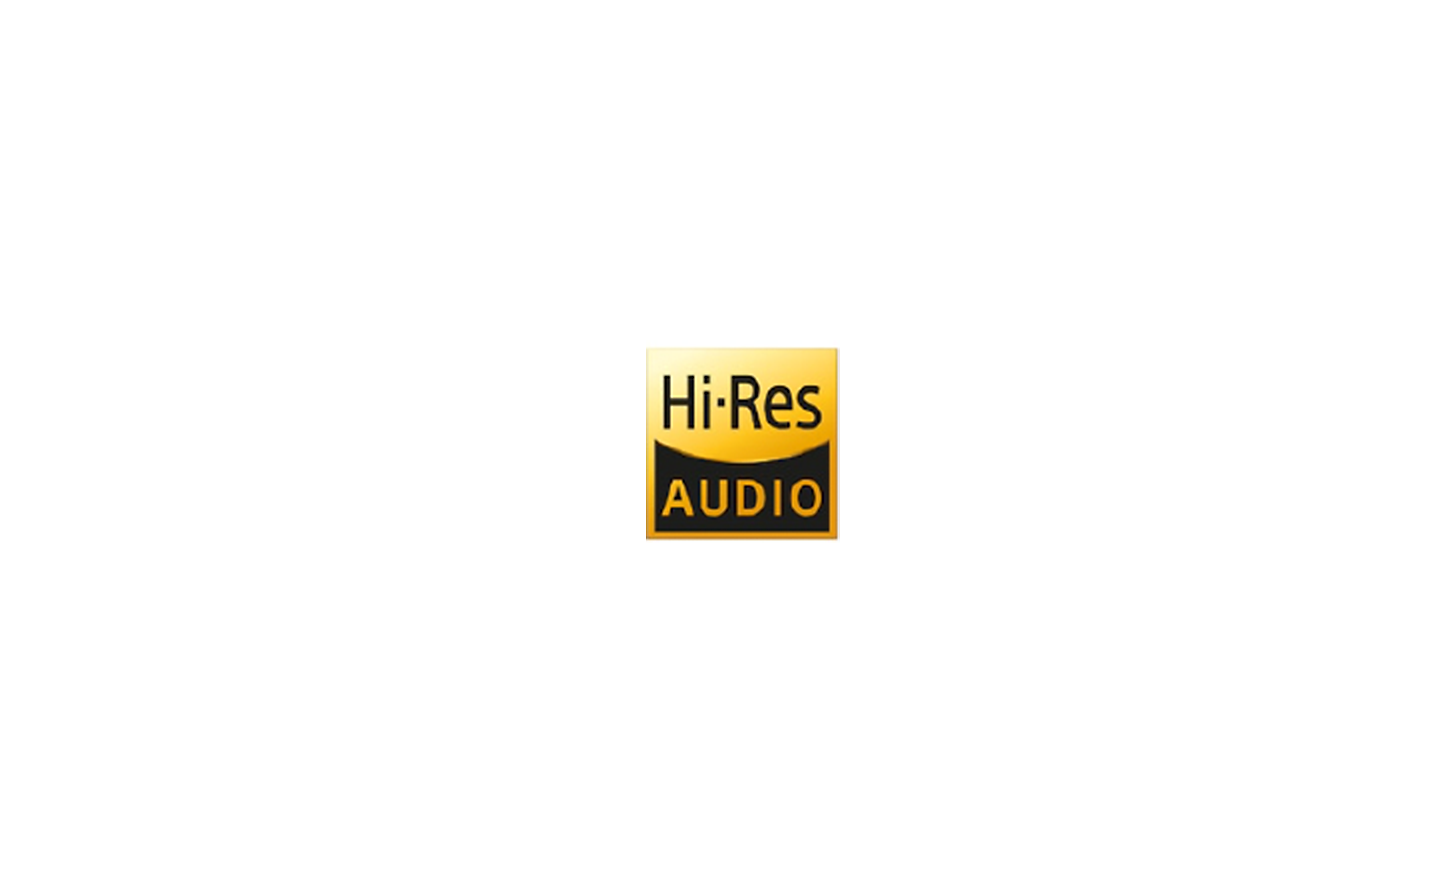 Juodos ir geltonos spalvos „Hi-Res AUDIO“ logotipas